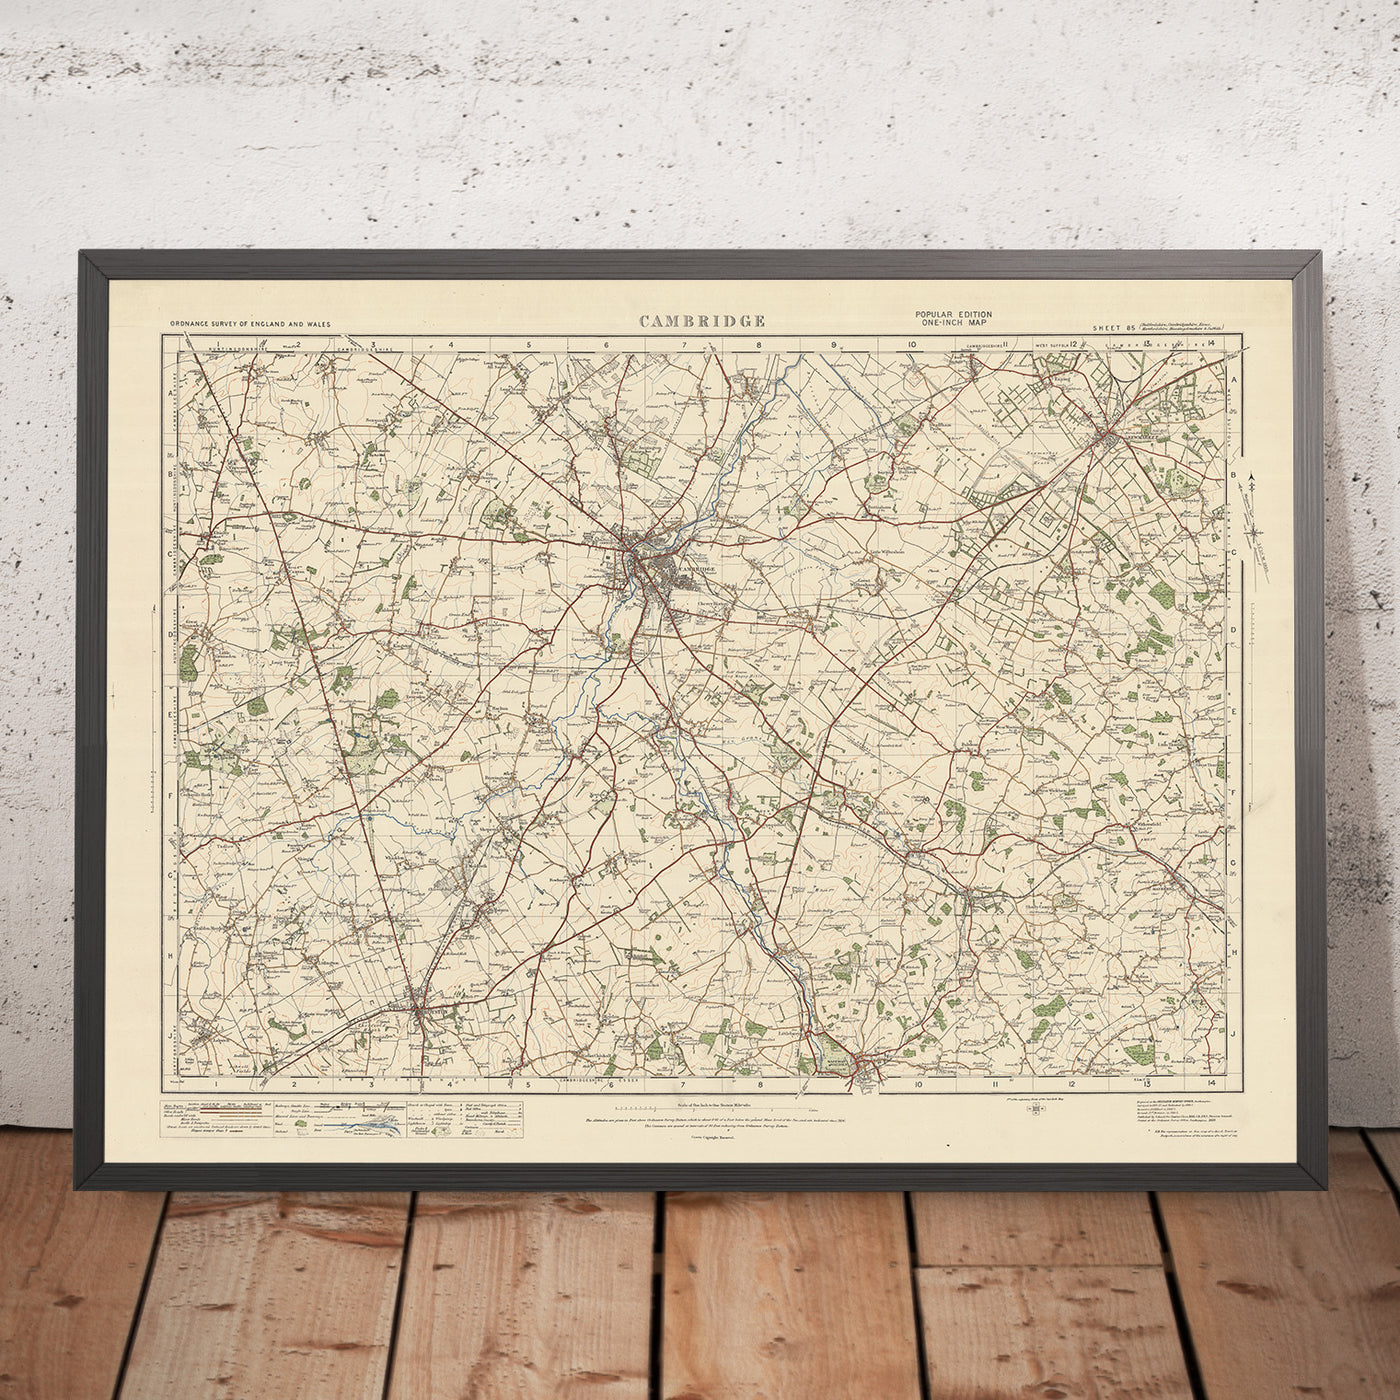 Old Ordnance Survey Map, Sheet 85 - Cambridge, 1925: Royston, Saffron Walden, Newmarket, Haverhill, Cambourne